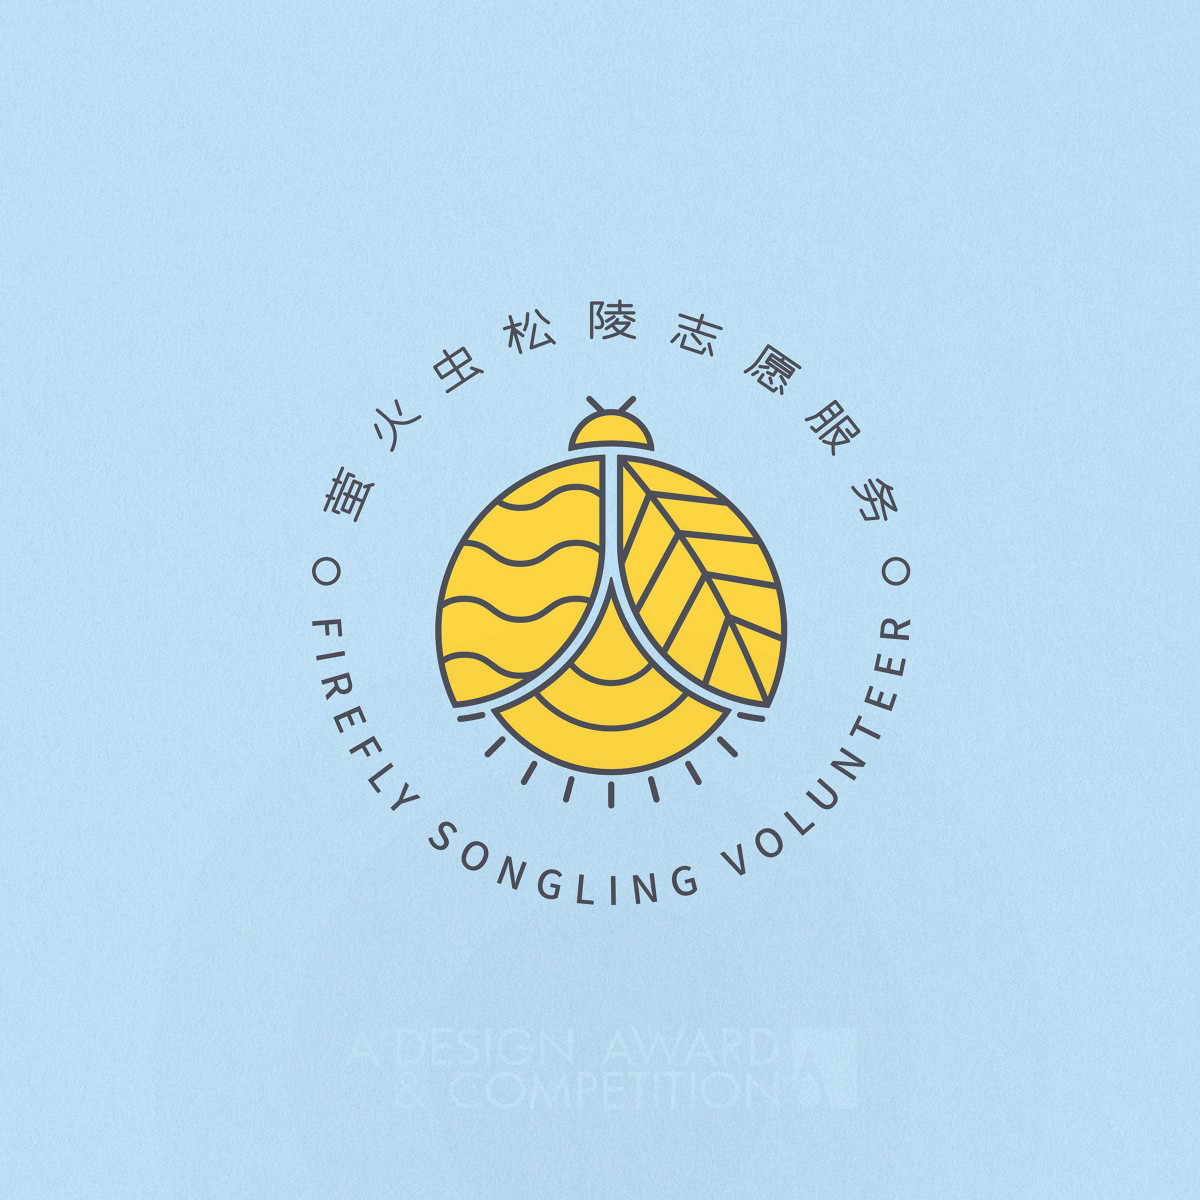 Firefly Songling Volunteer Branding by Suzhou SoFeng Design Co.,Ltd.